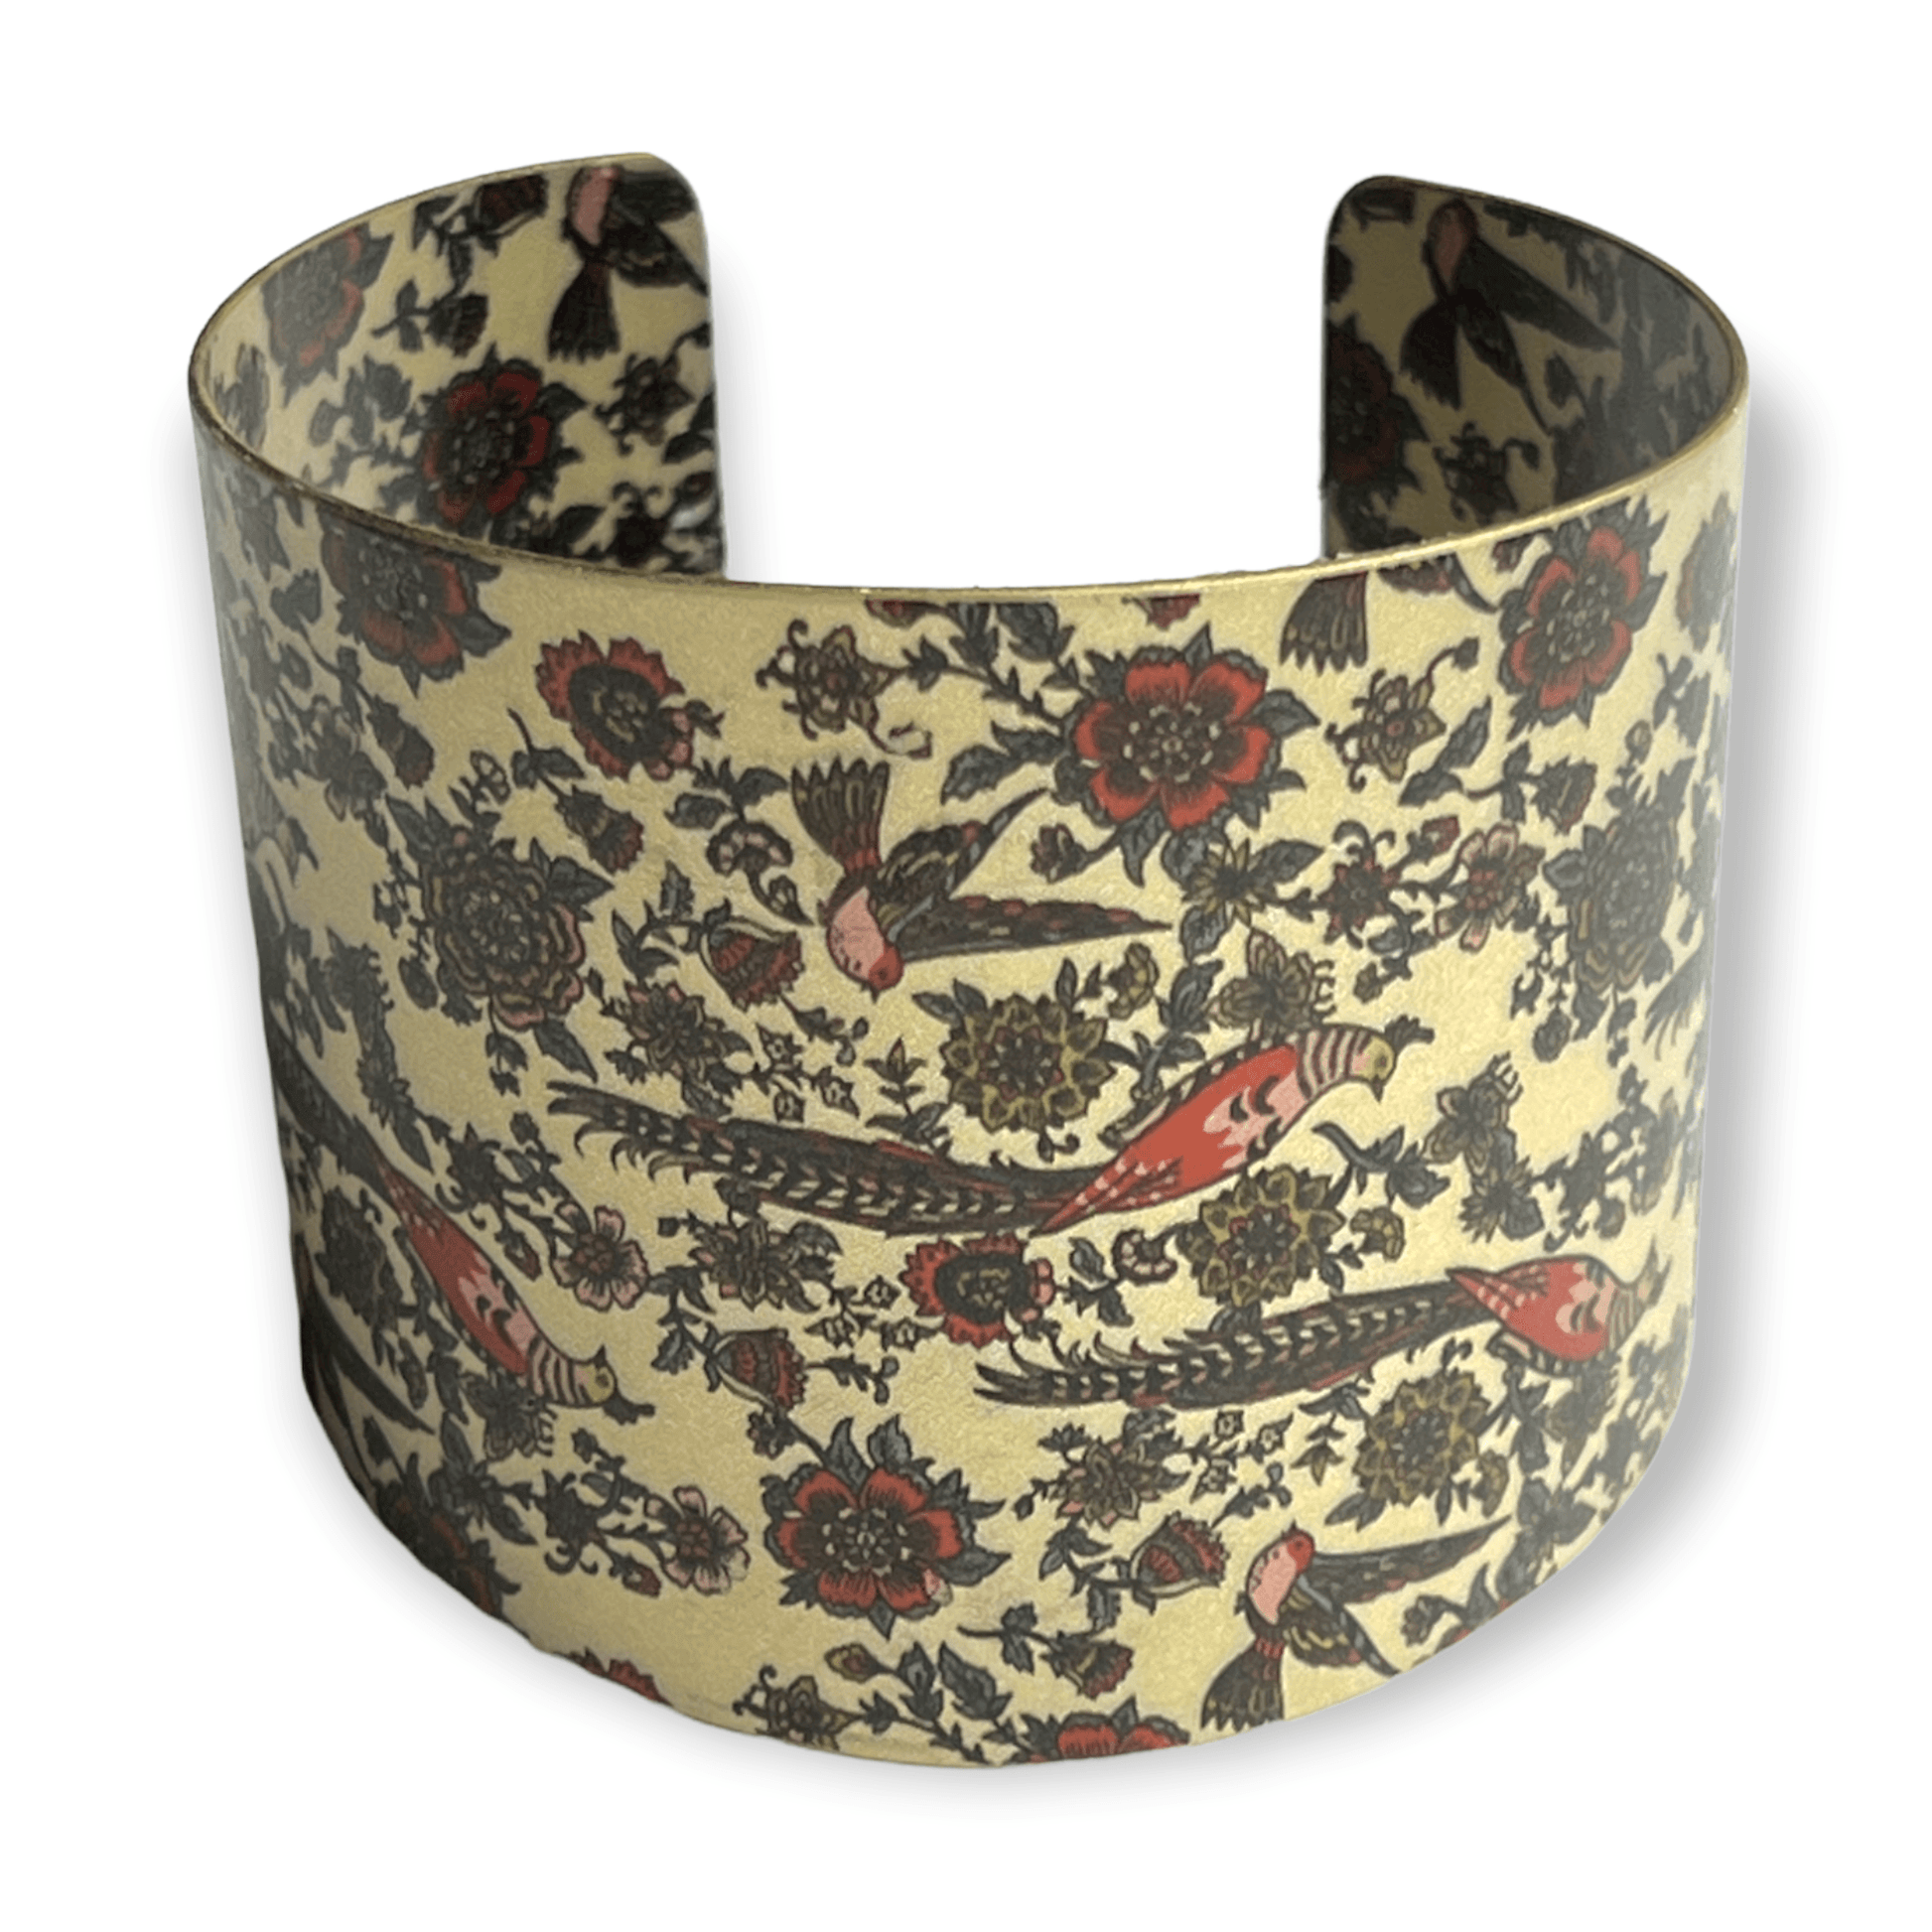 Travel inspired patterned brass cuff bracelet - Sundara Joon